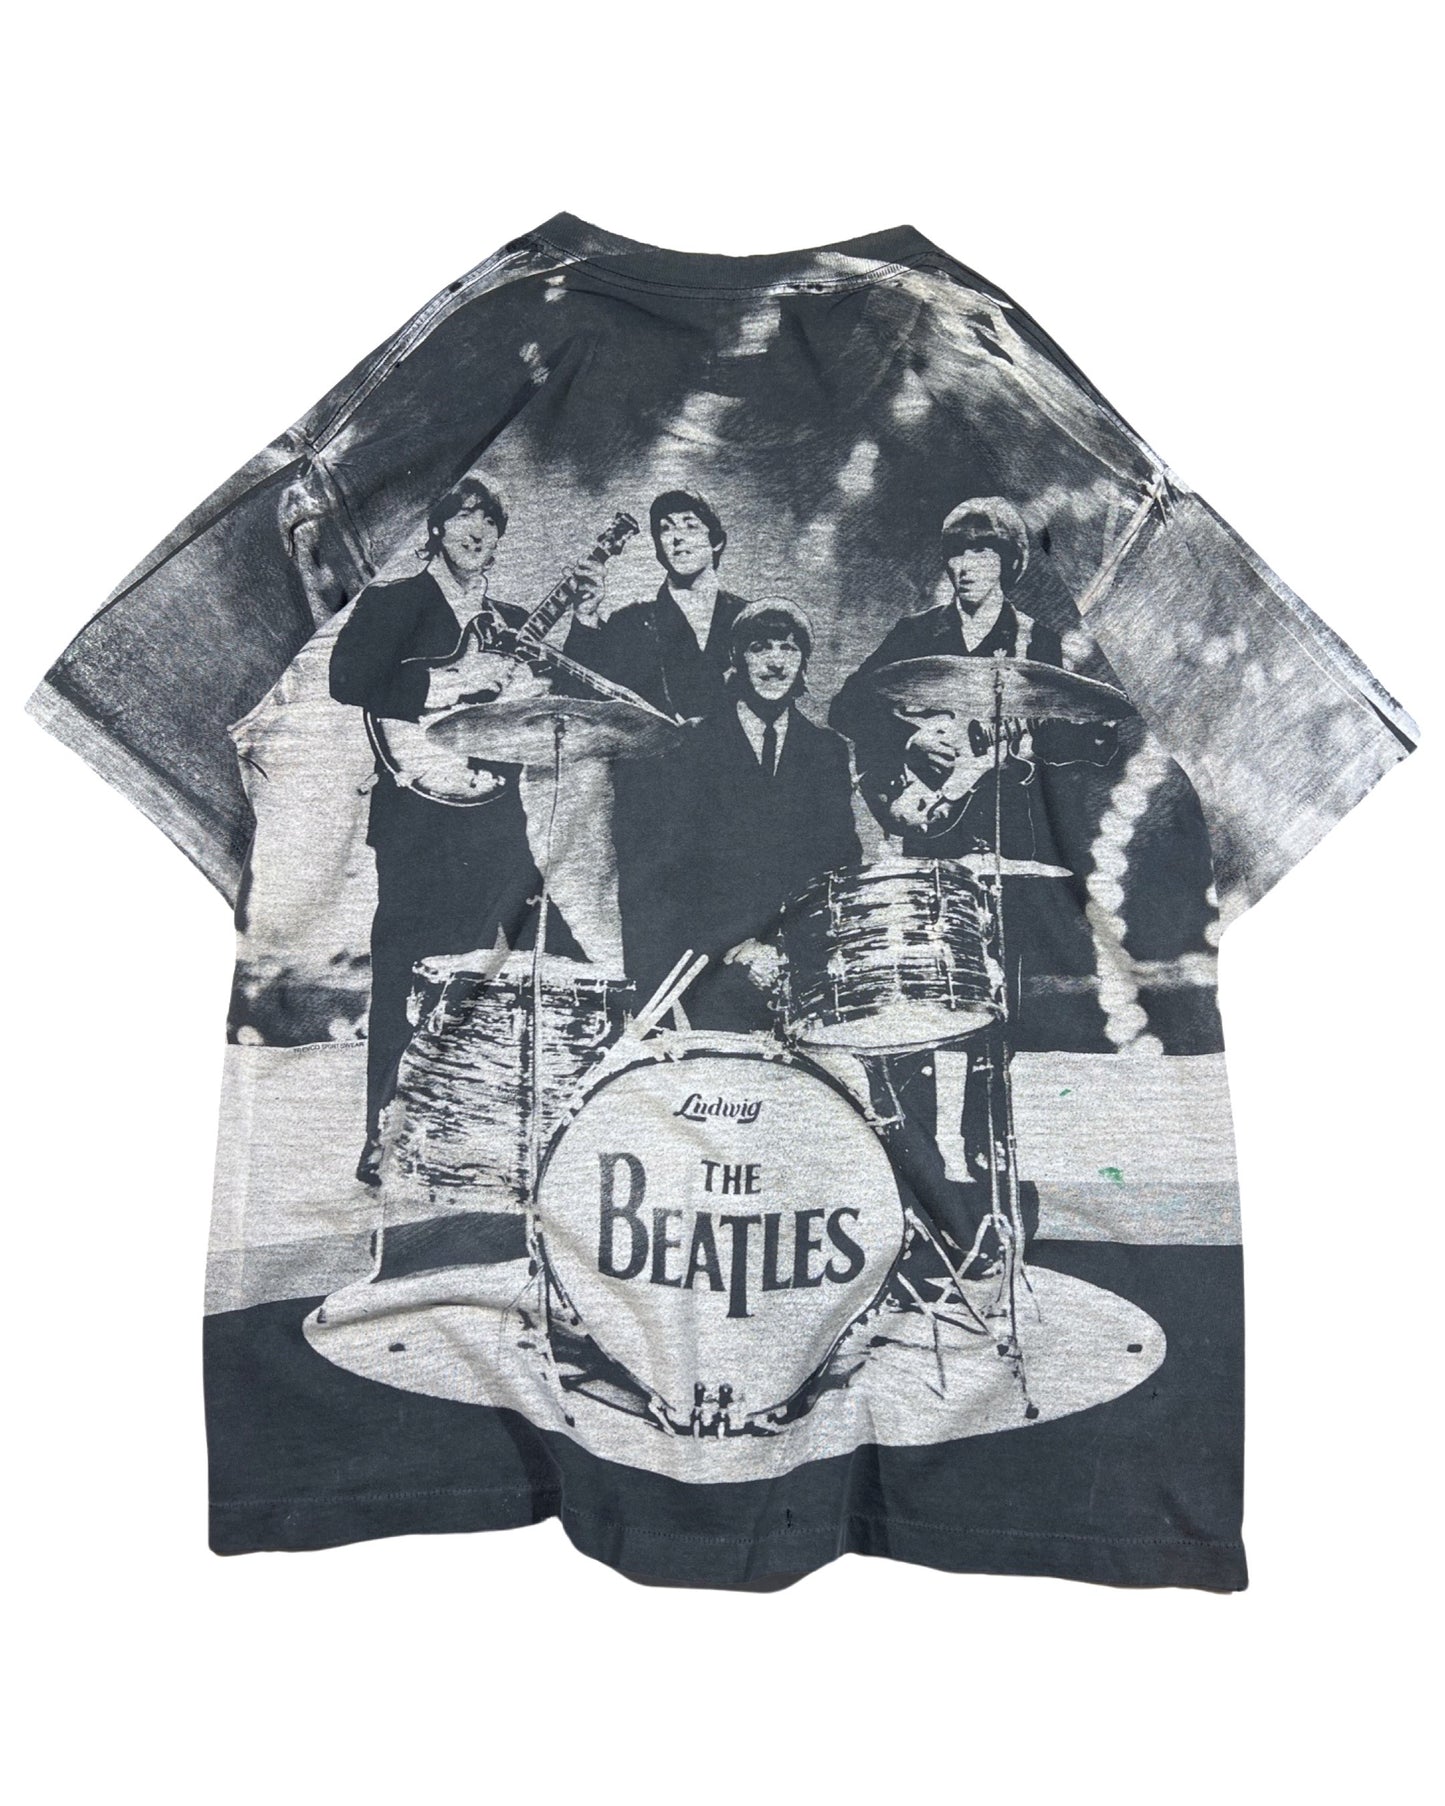 Vintage The Beatles Tee - XL